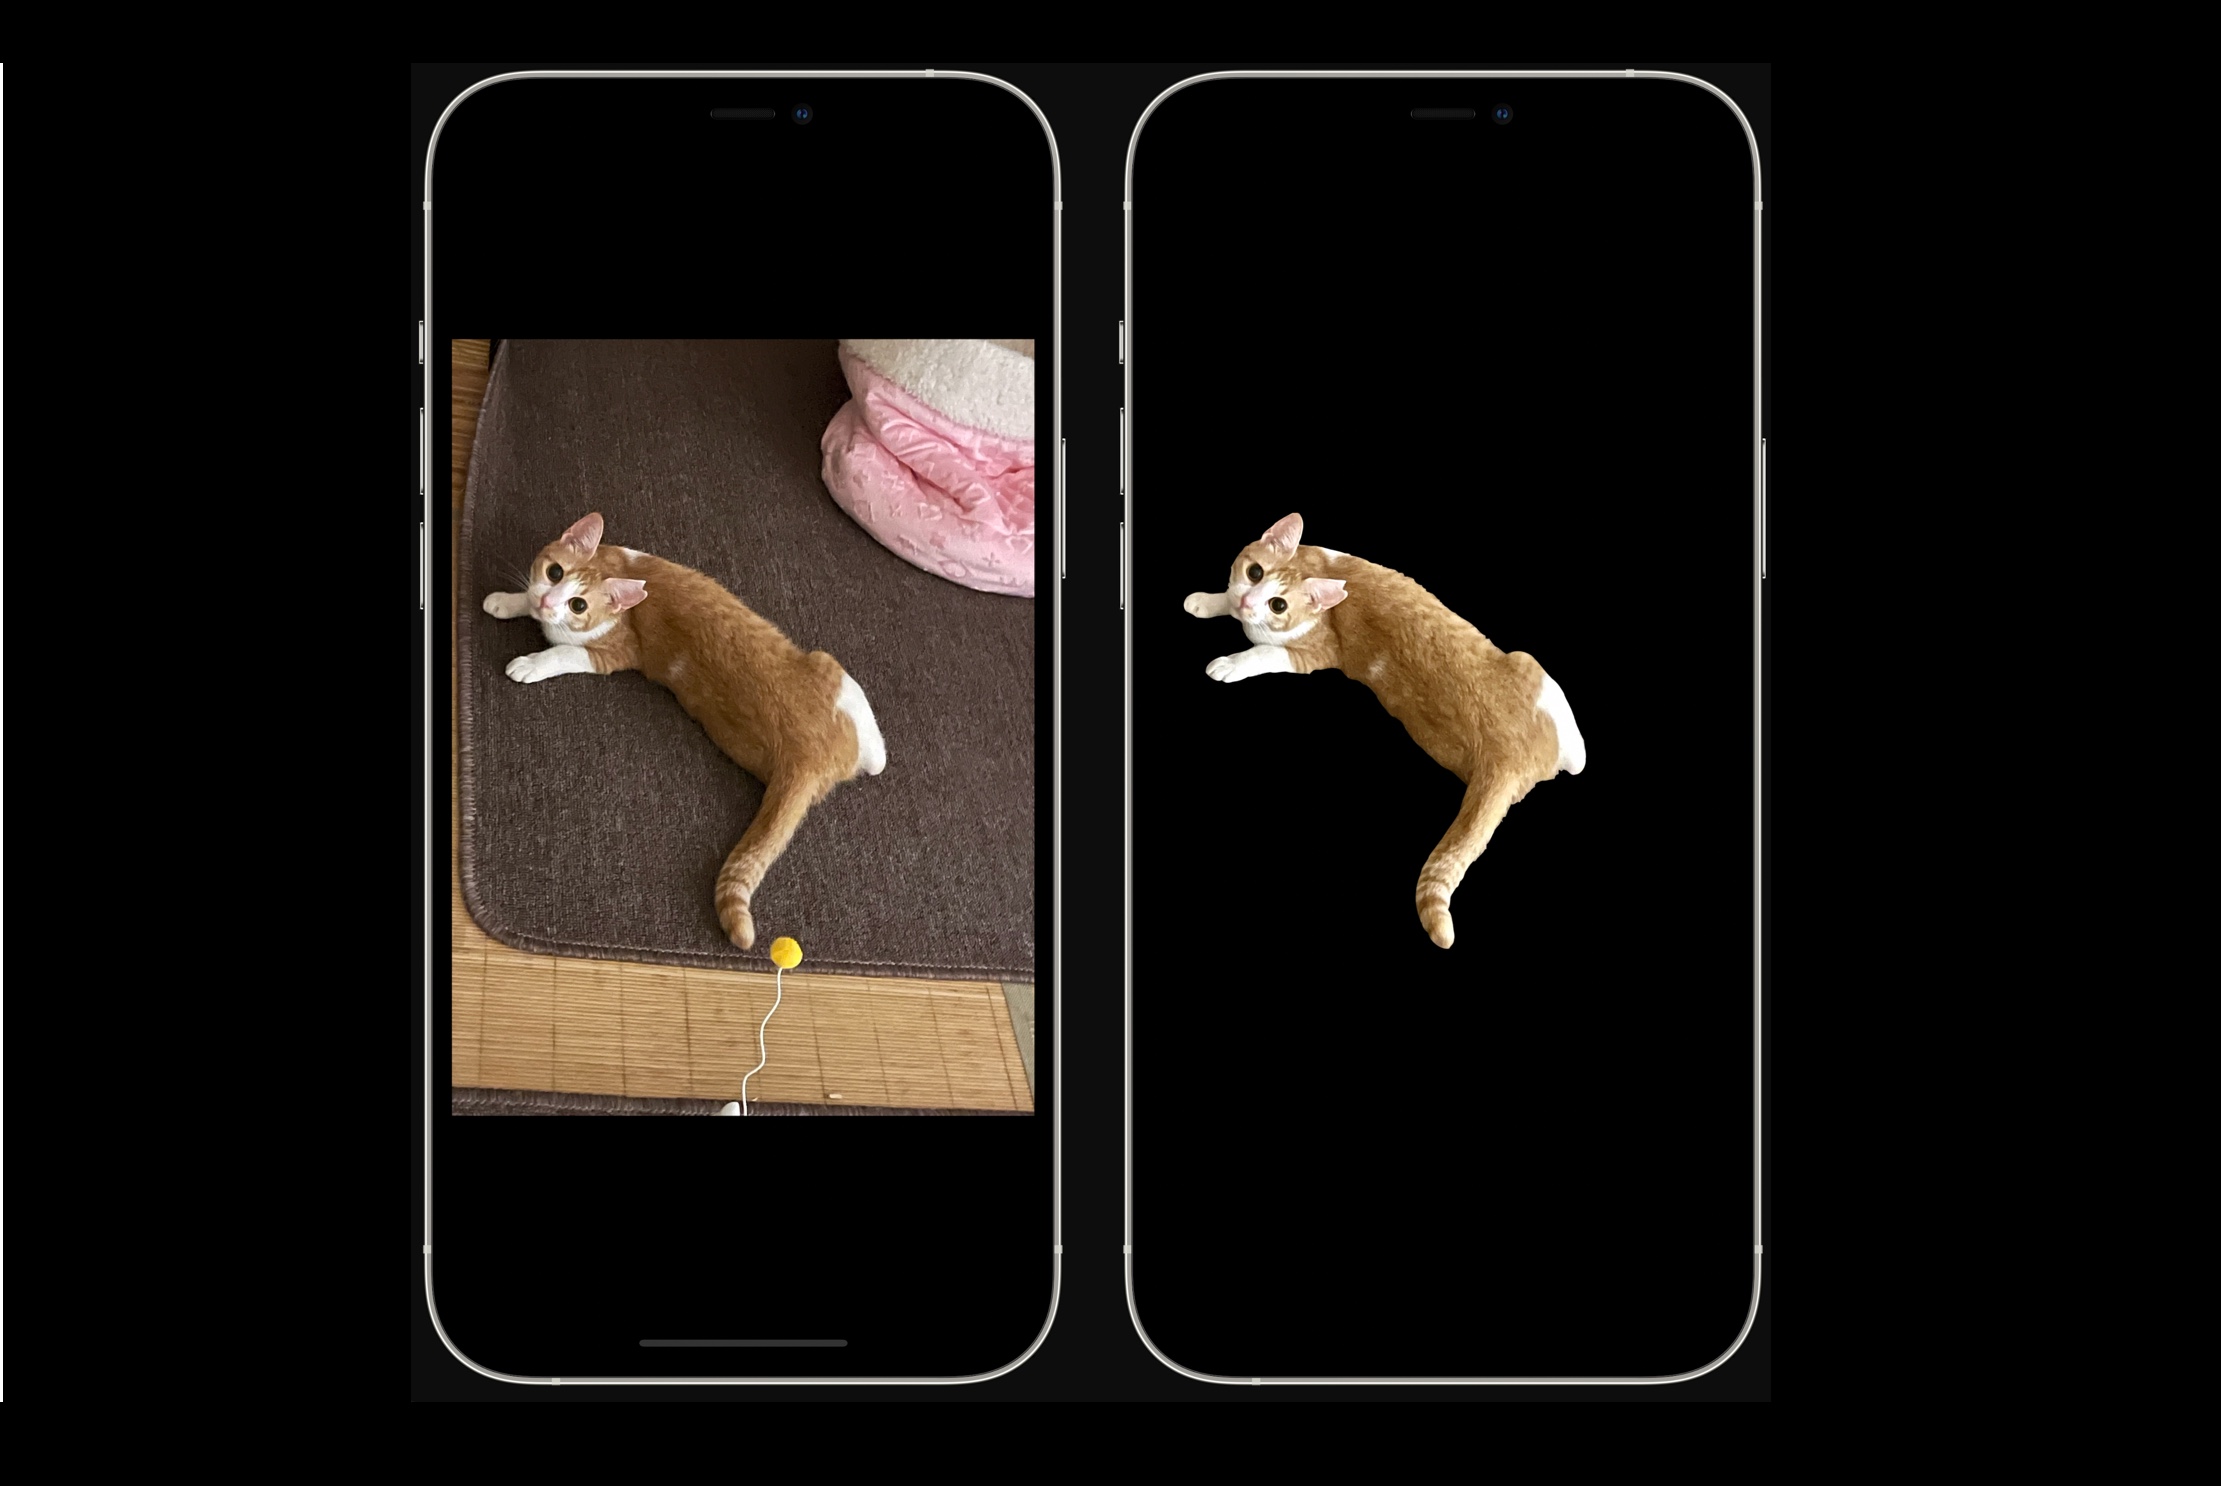 iPhoneおよびiPadの写真から背景を簡単に削除する方法